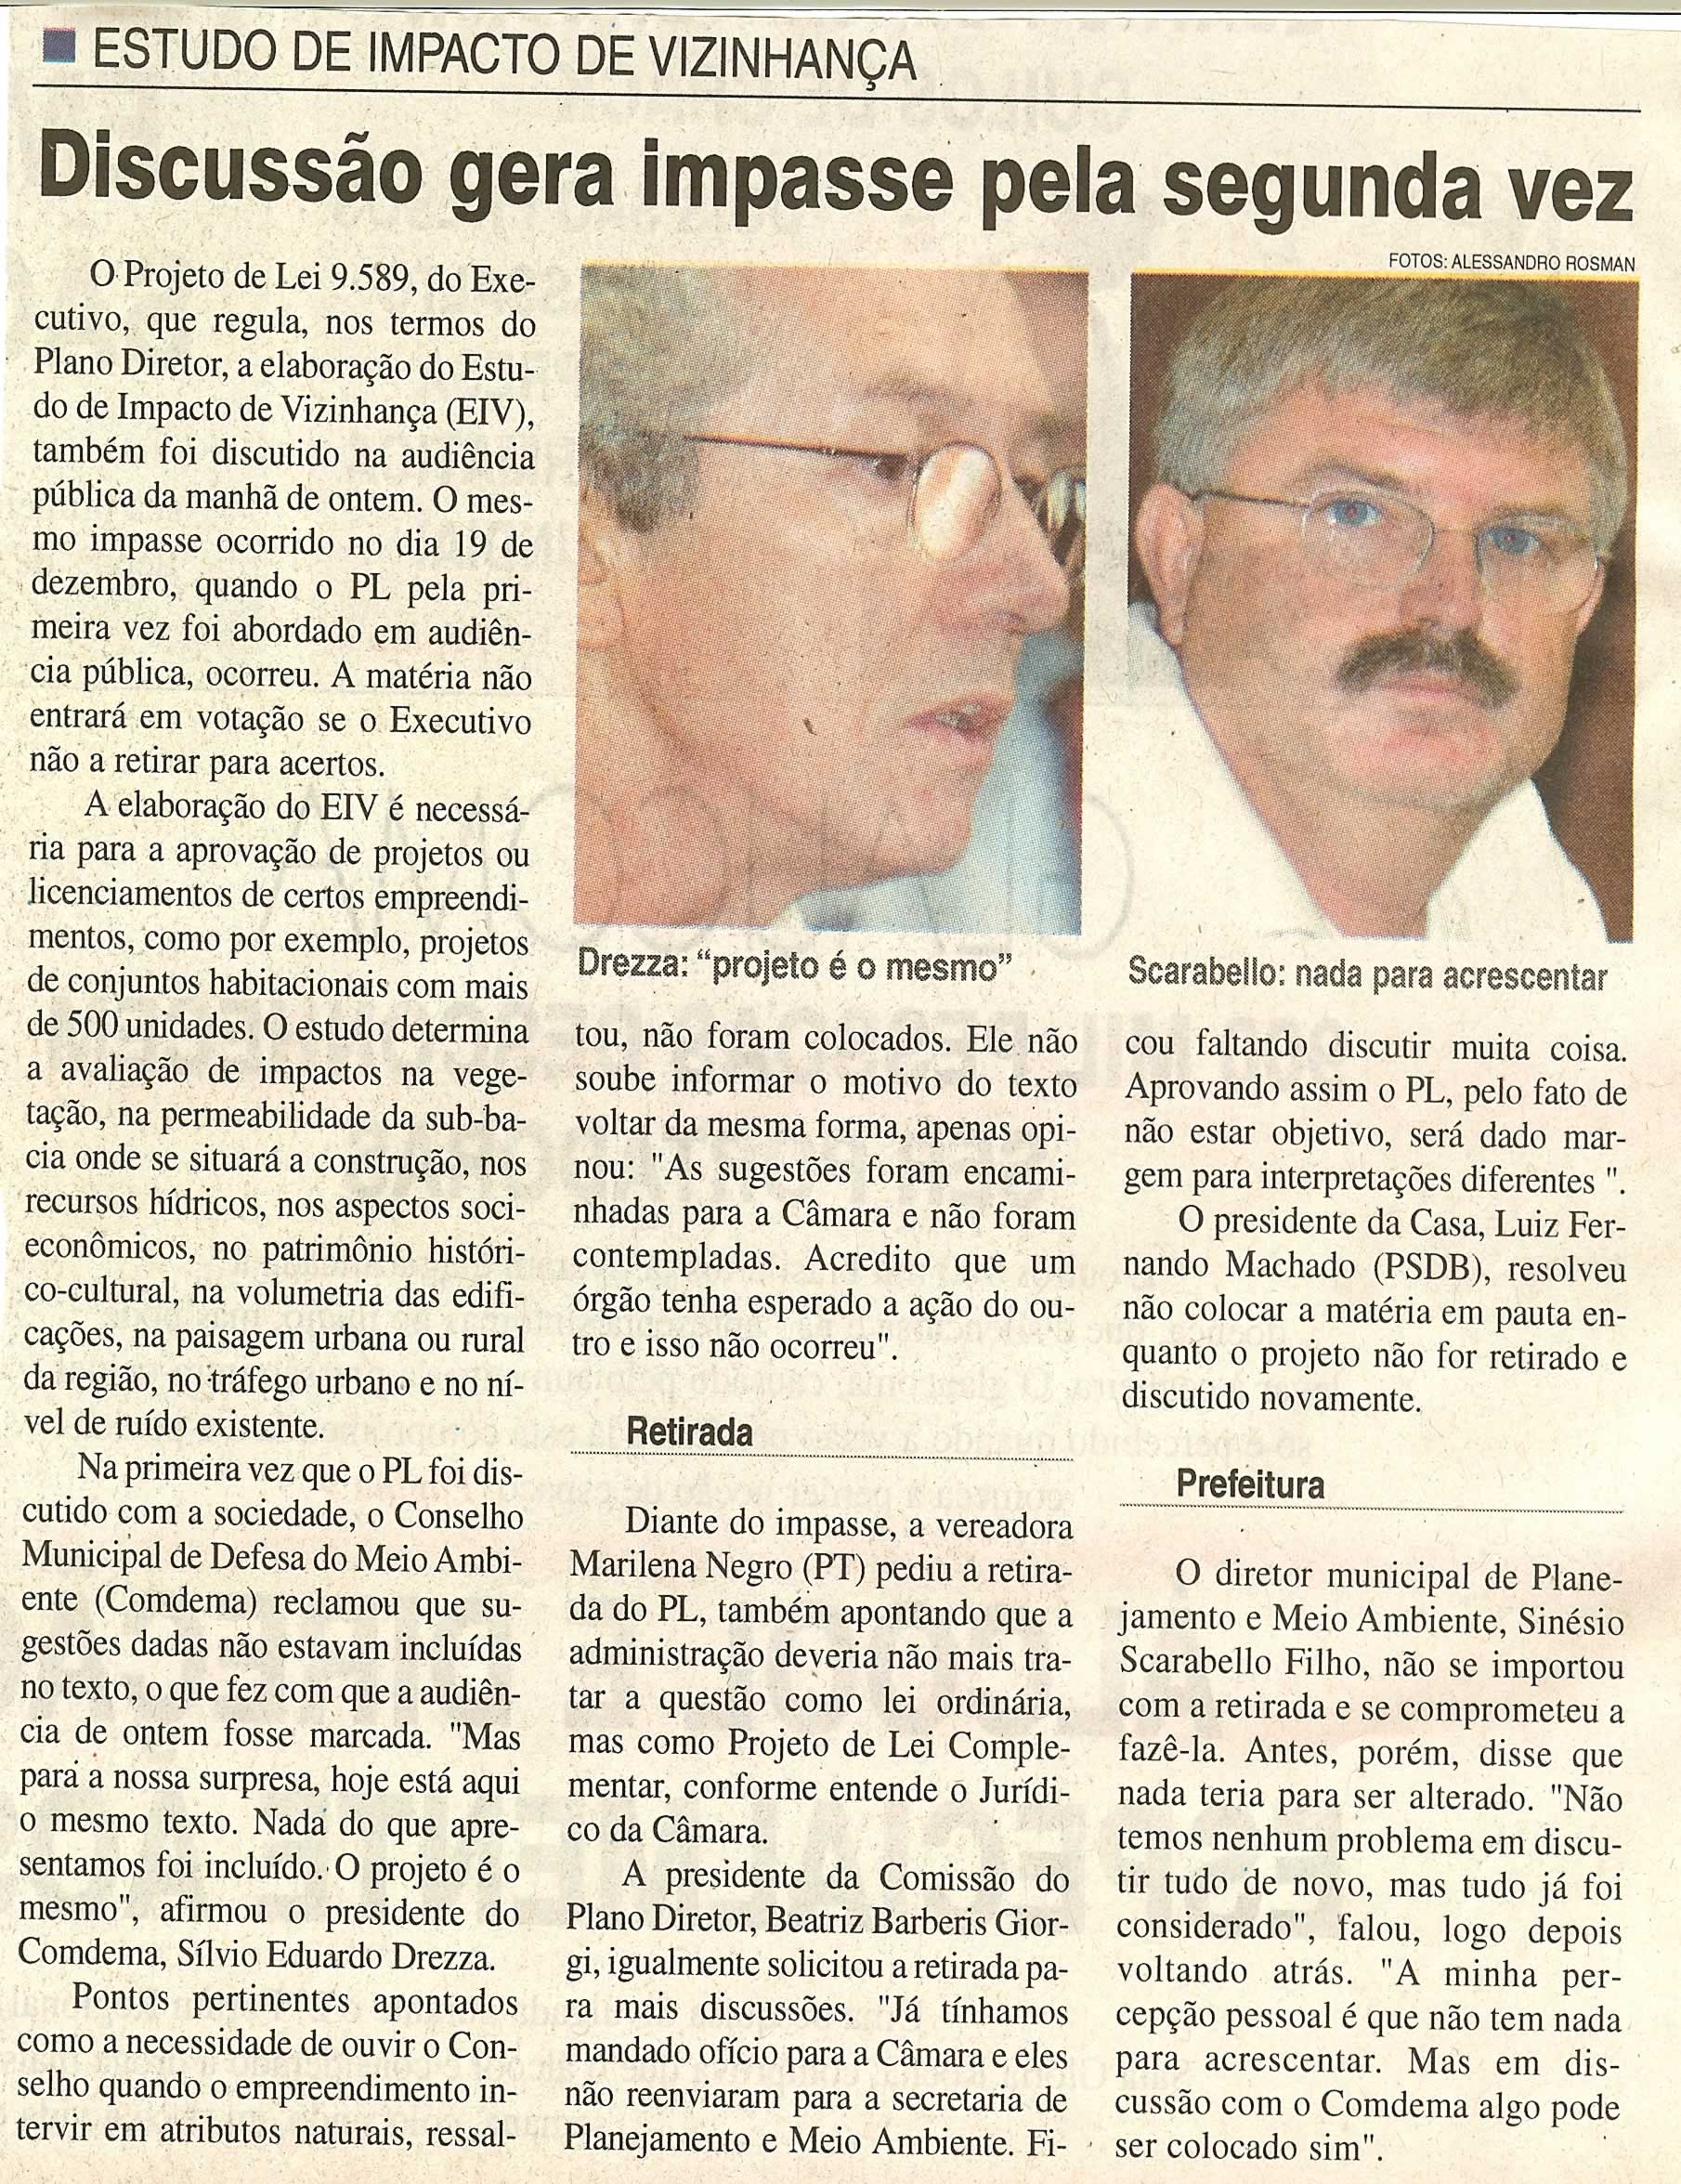 Jornal da Cidade - 06/03/2008